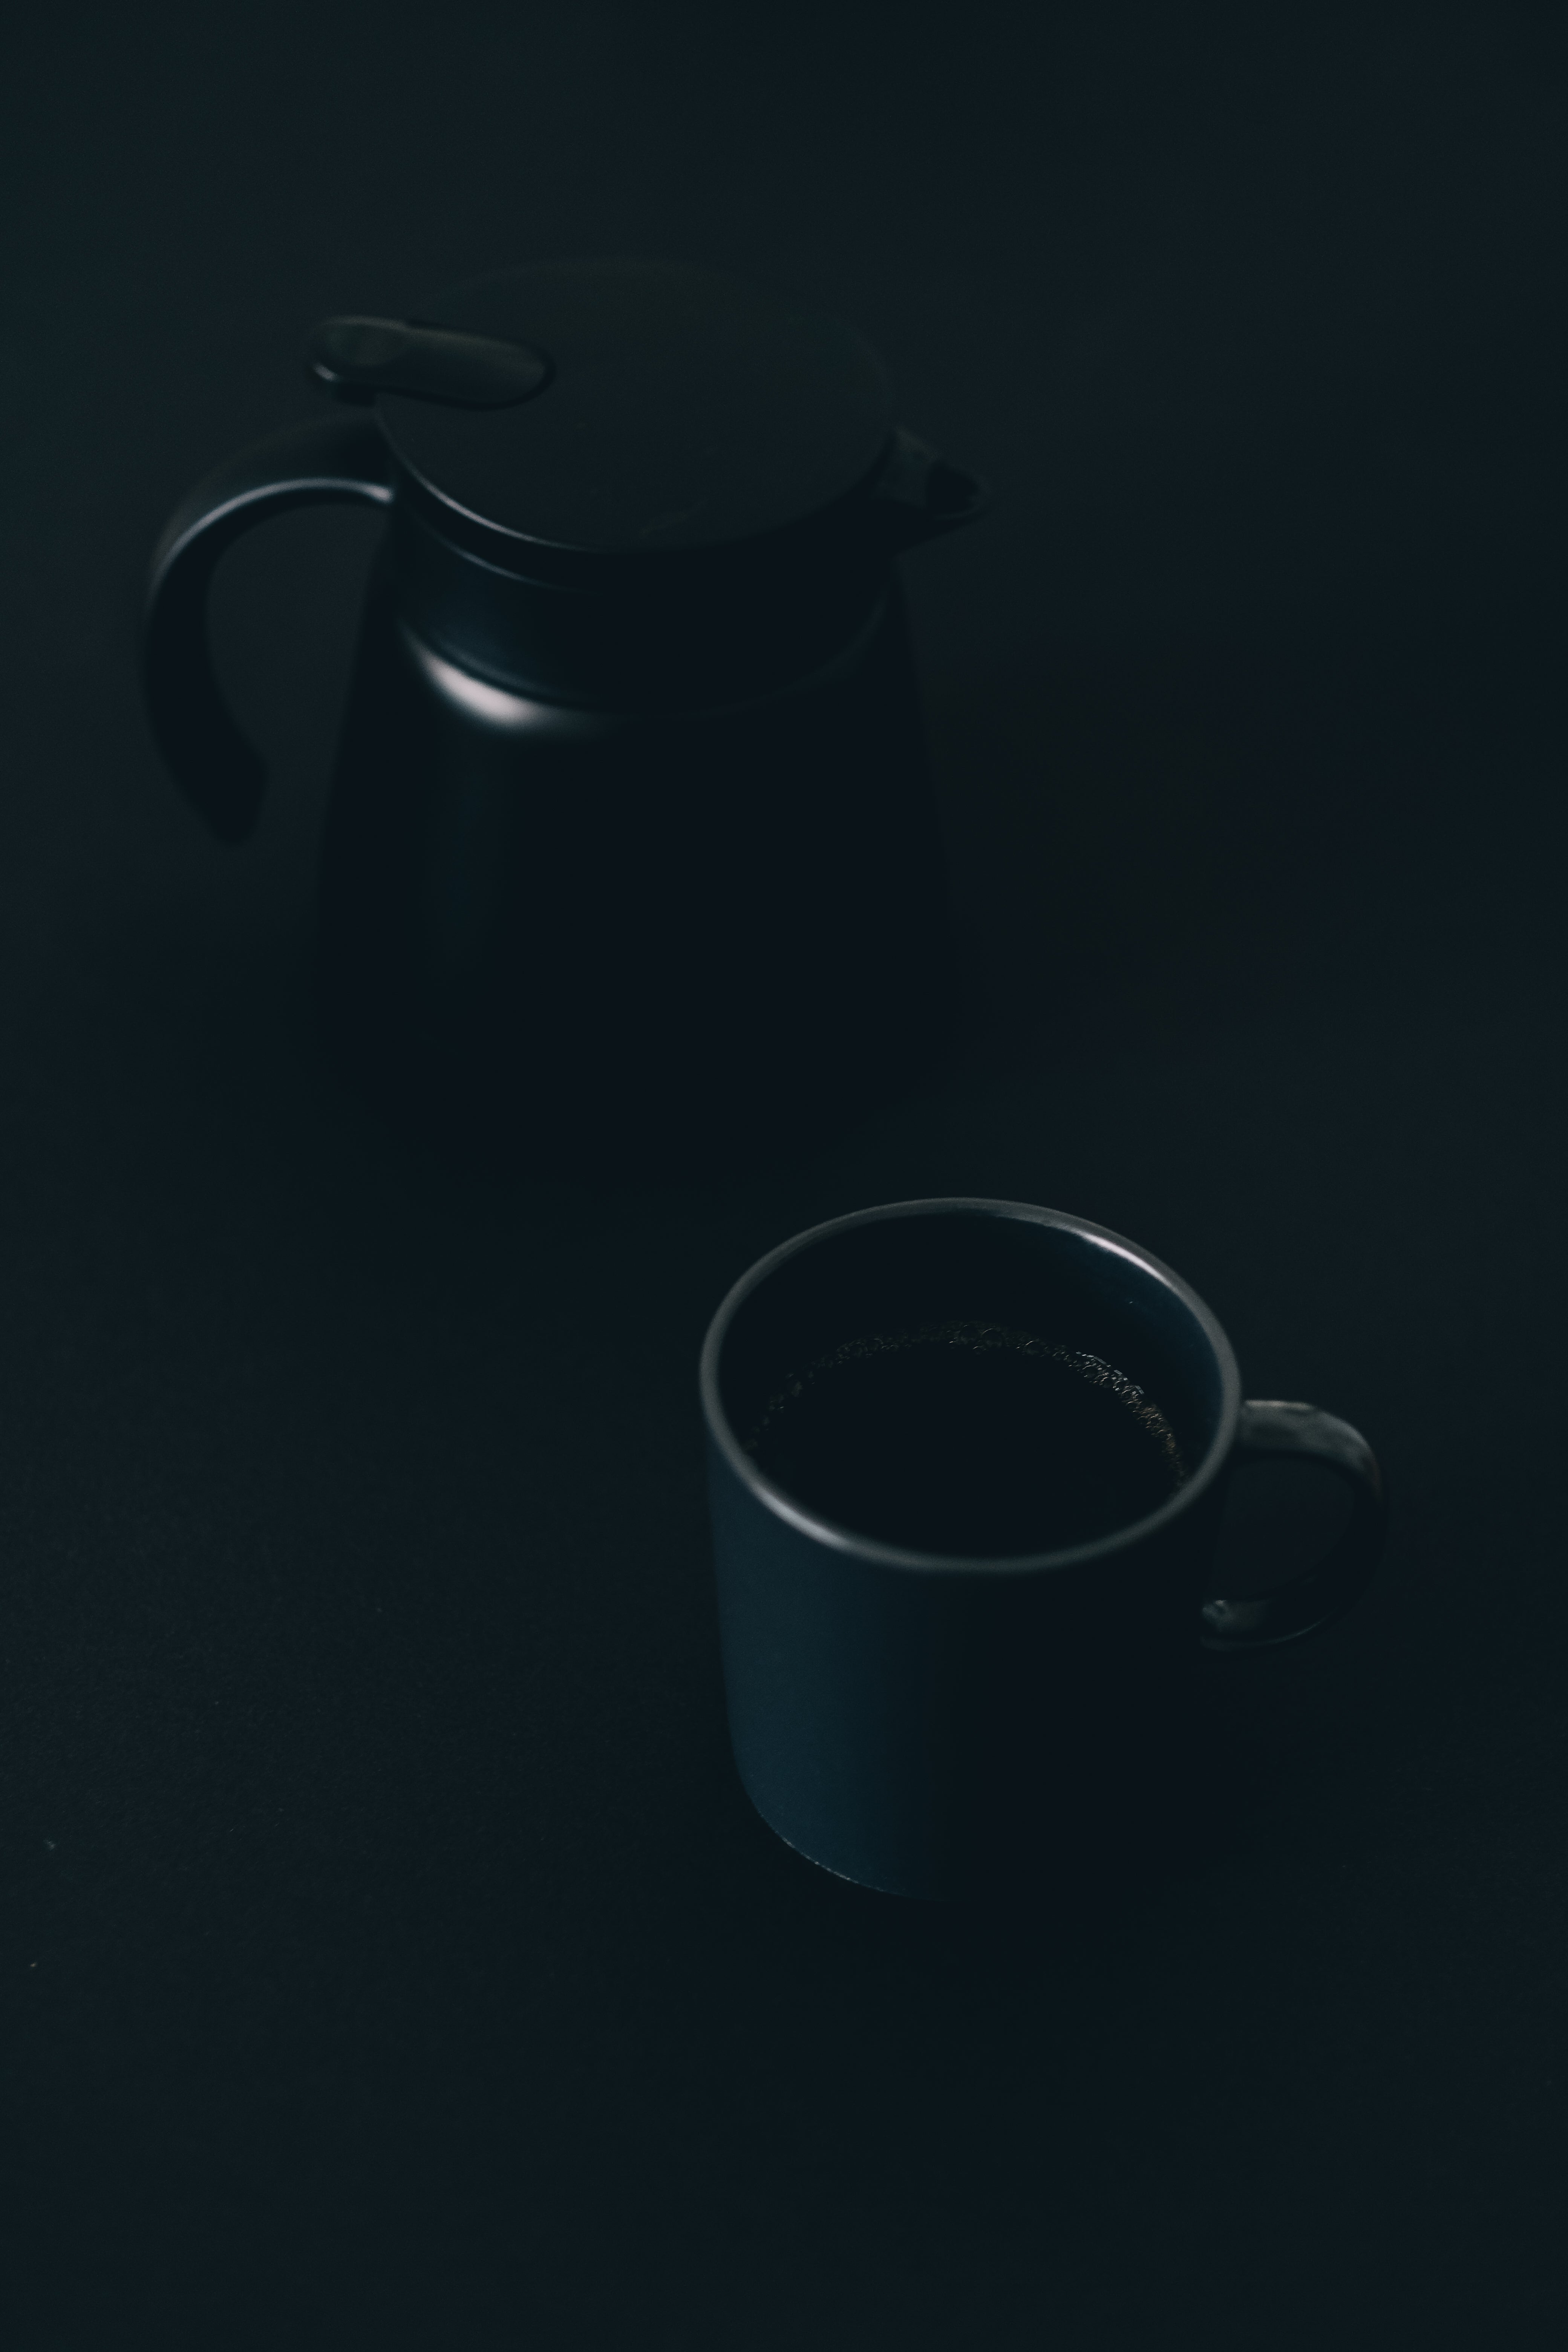 Royalty-Free photo: Black DSLR camera capturing black ceramic mug with  gold-colored spoon